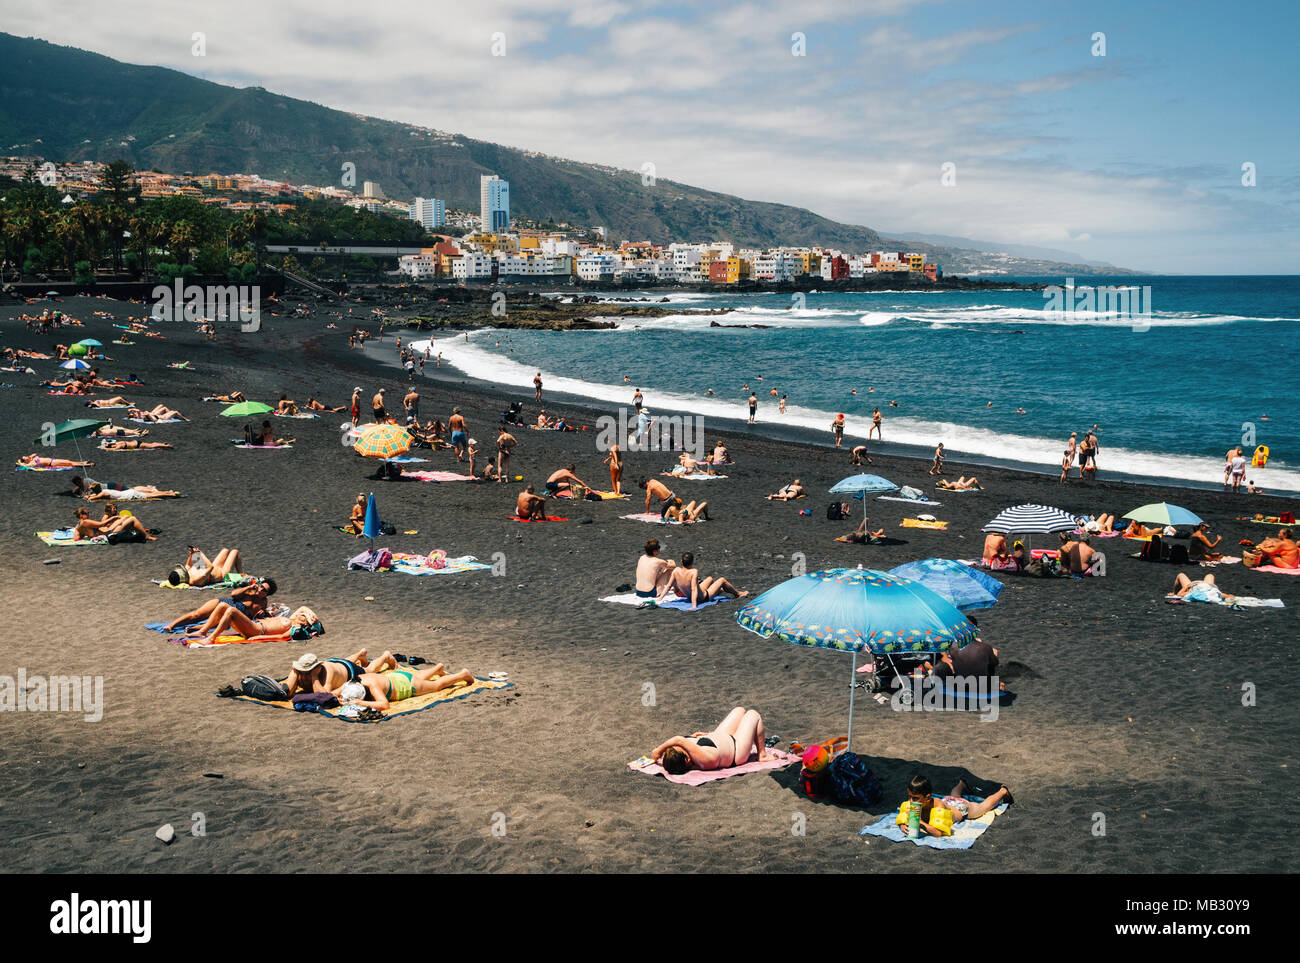 Puerto de la cruz, Tenerife, Canary islands, Spain - May 30, 2017: People sunbathing and relaxation in Playa Jardin. One of the best black sand beache Stock Photo